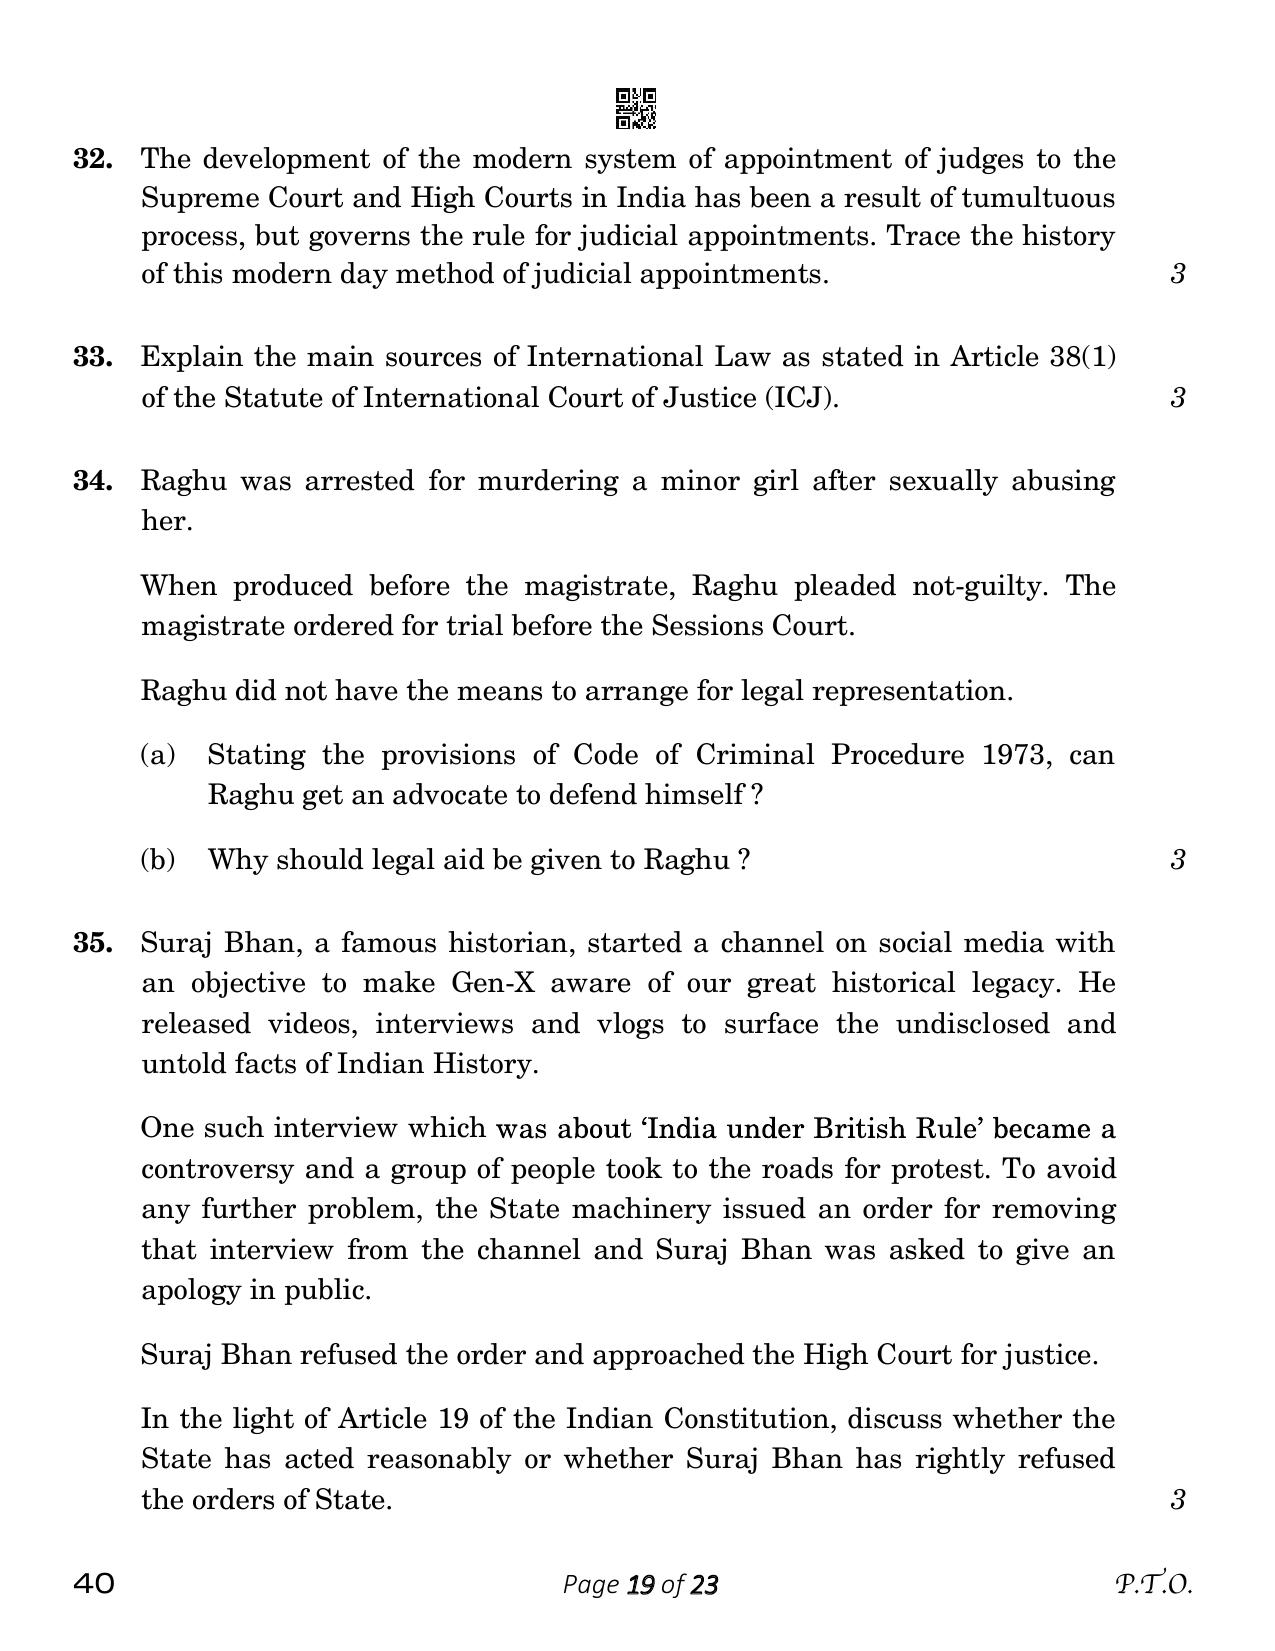 CBSE Class 12 Legal Studies (Compartment) 2023 Question Paper - Page 19